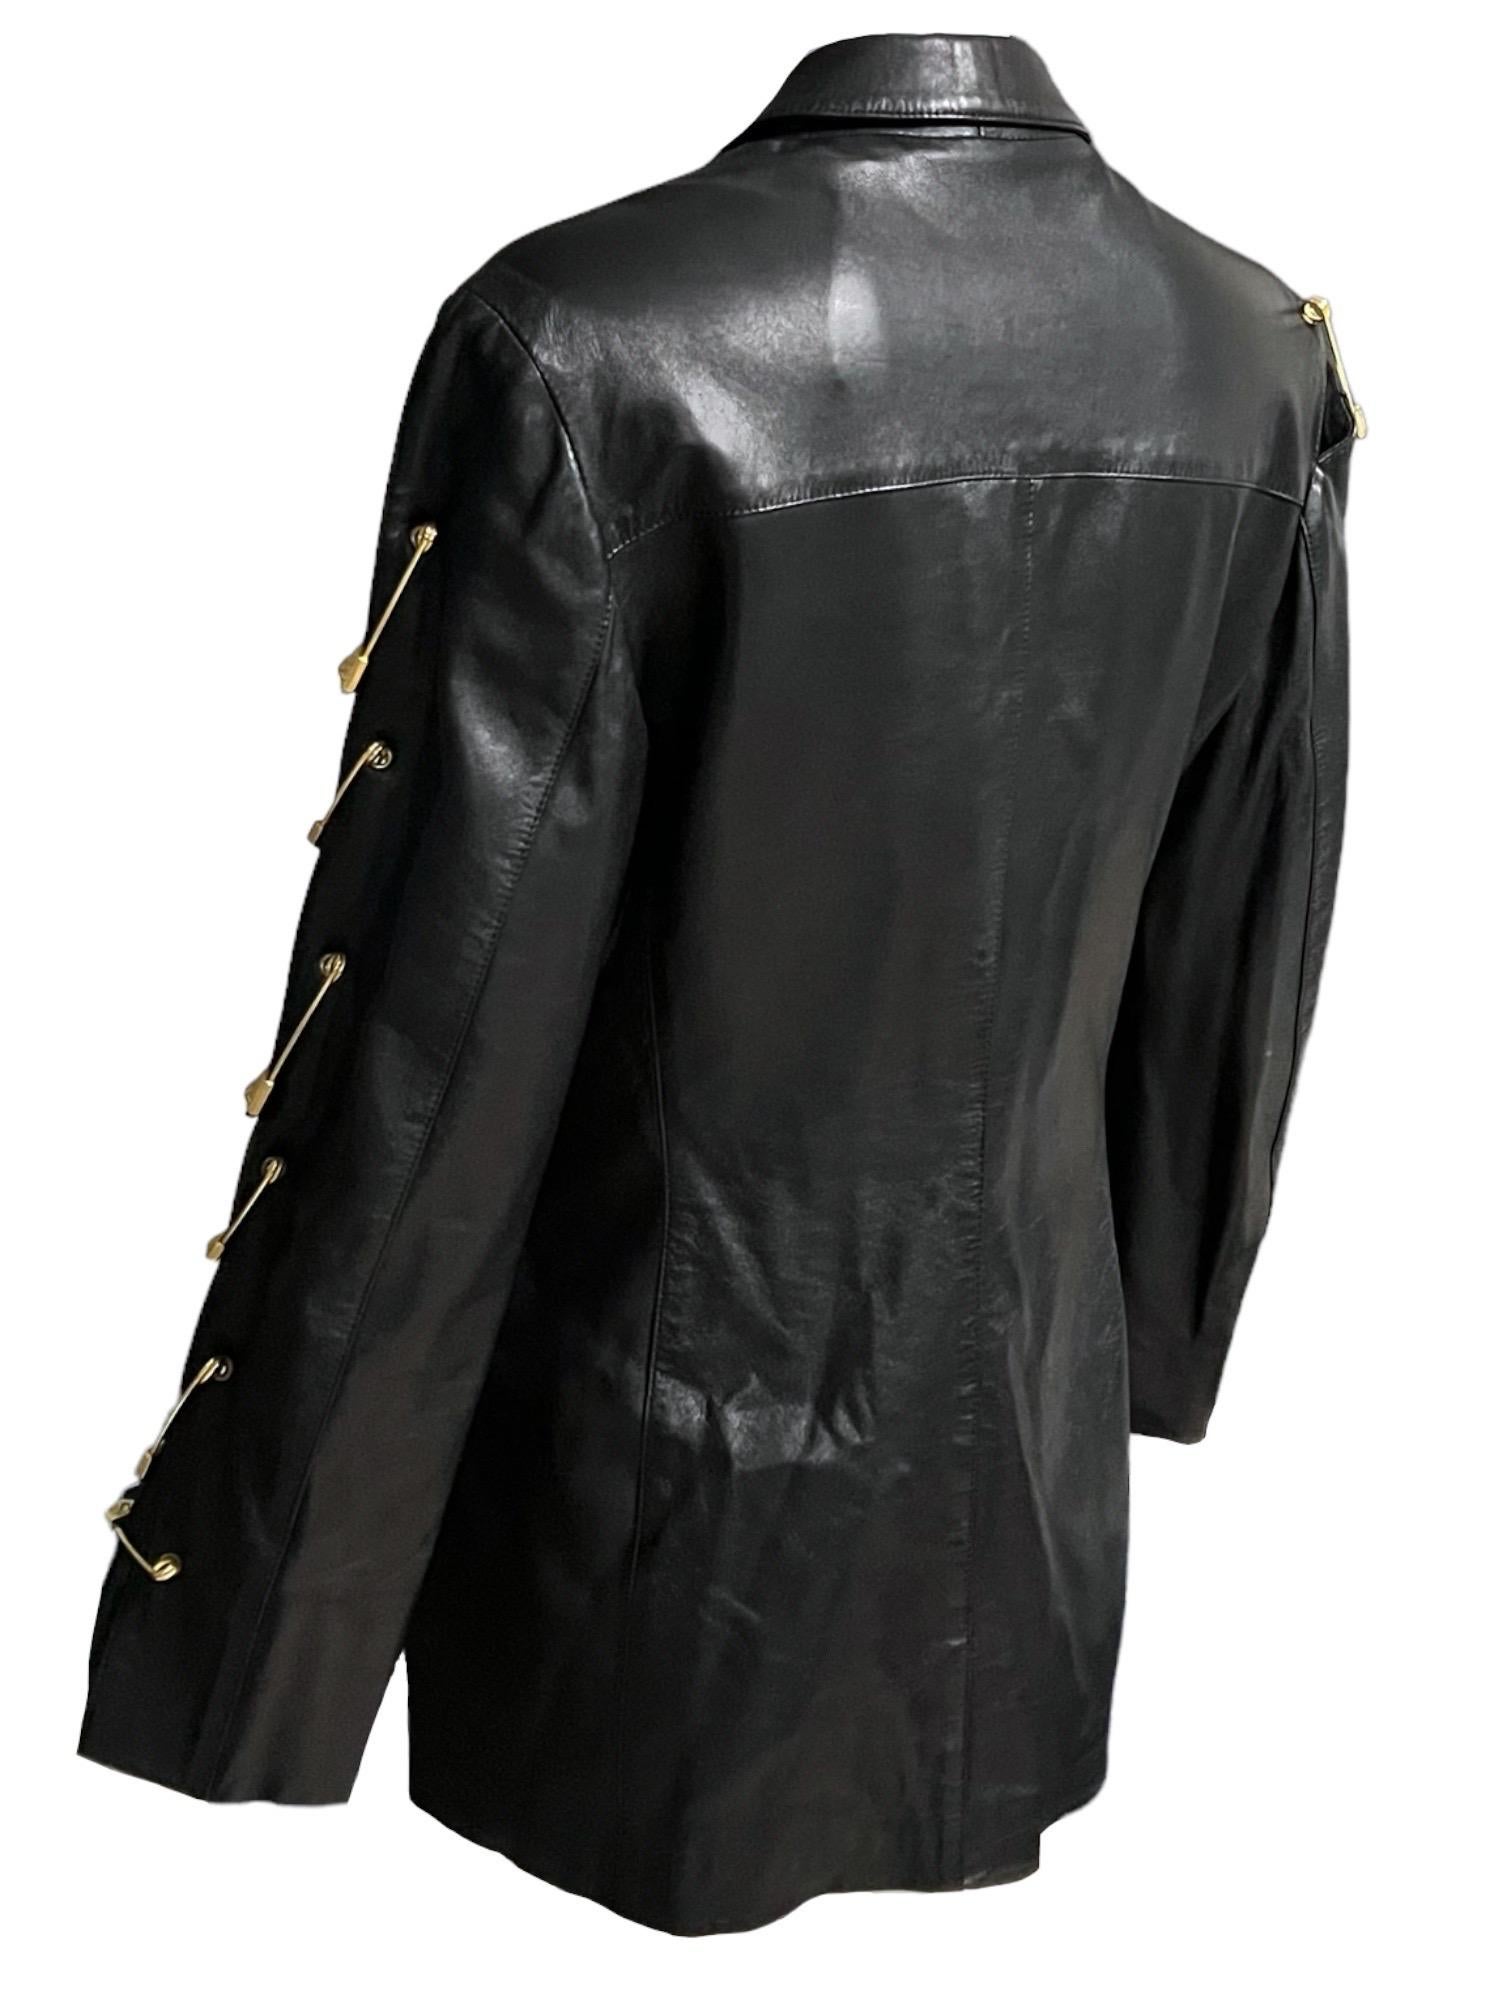 Gianni Versace Versus 90's Vintage Black Leather Safety Pin Jacket 3